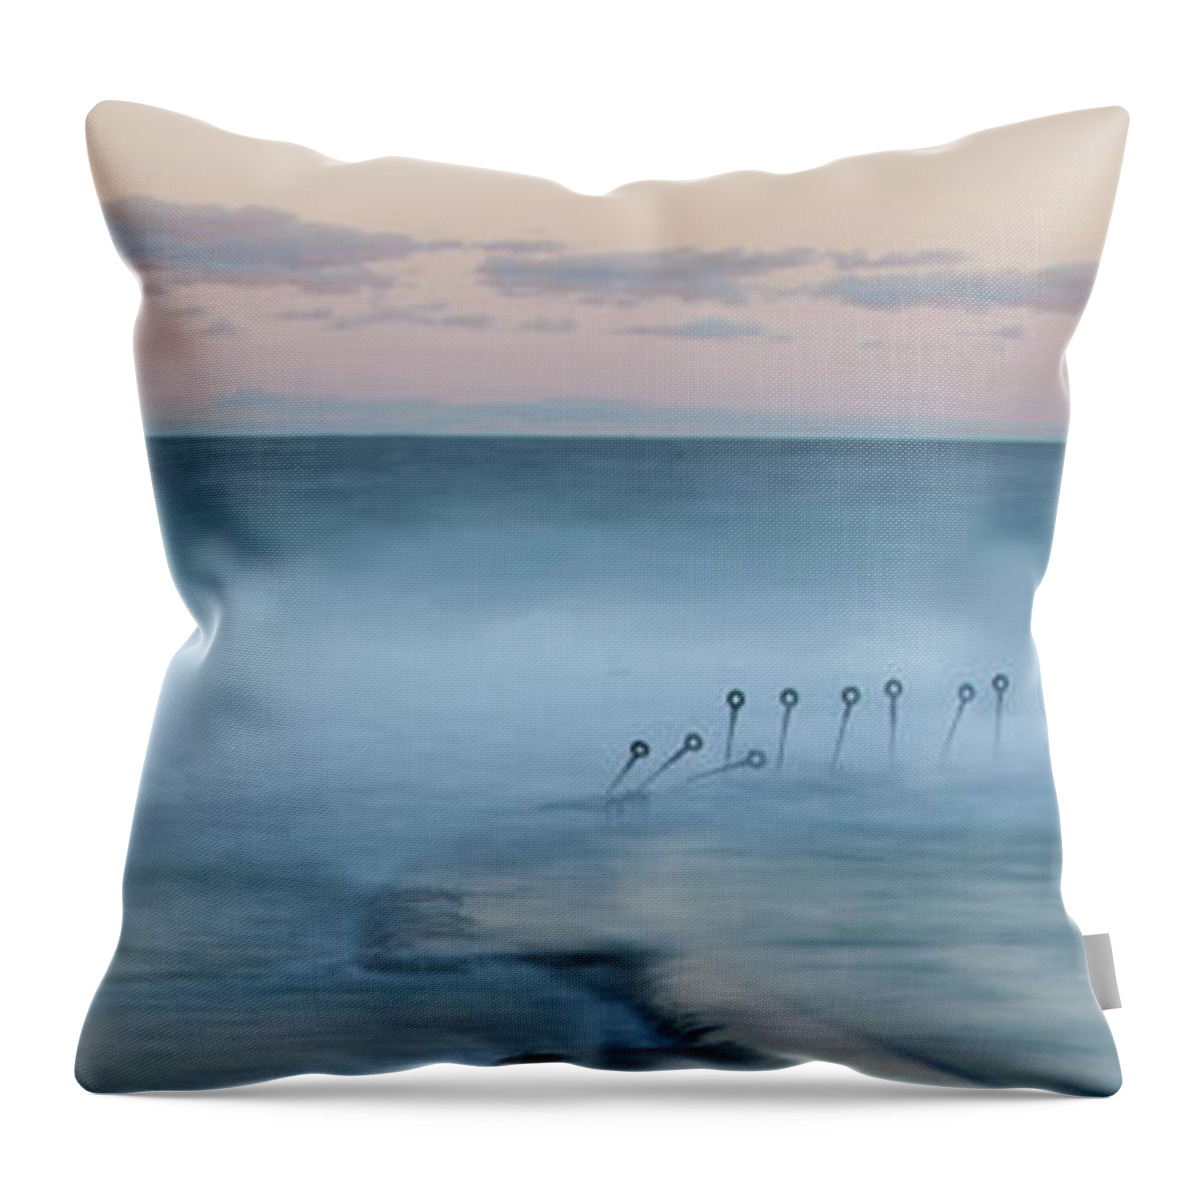 Australia Throw Pillow featuring the photograph Spirit Of The Ocean by Az Jackson